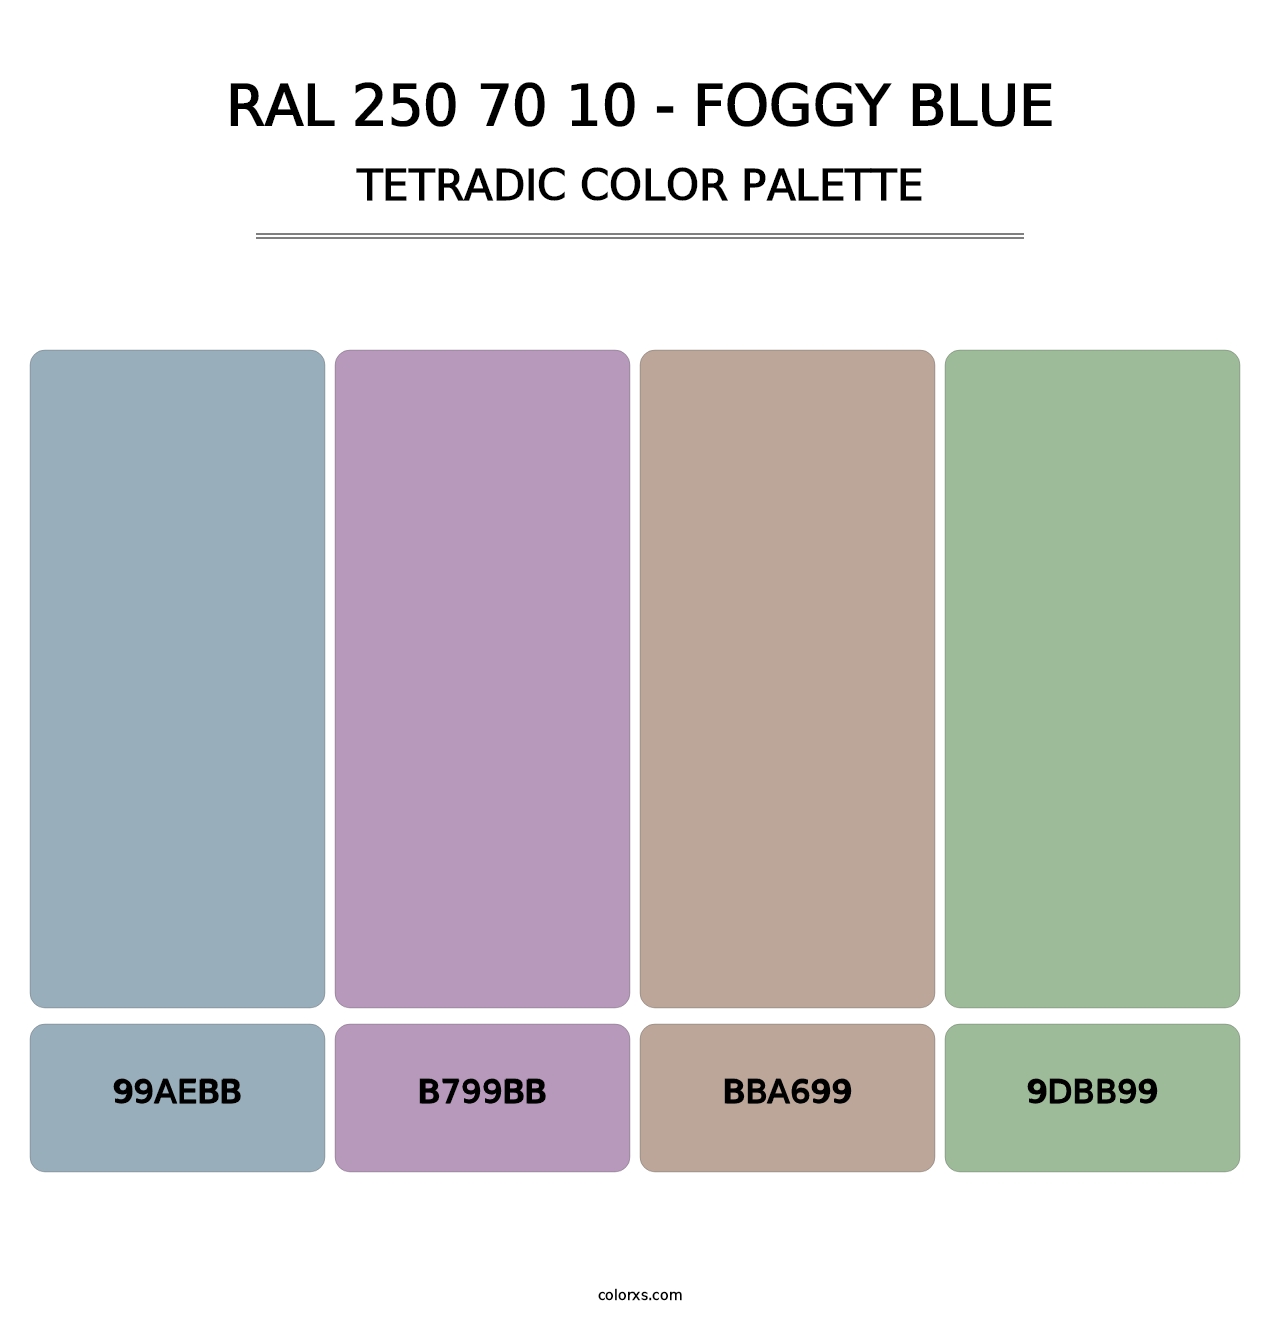 RAL 250 70 10 - Foggy Blue - Tetradic Color Palette